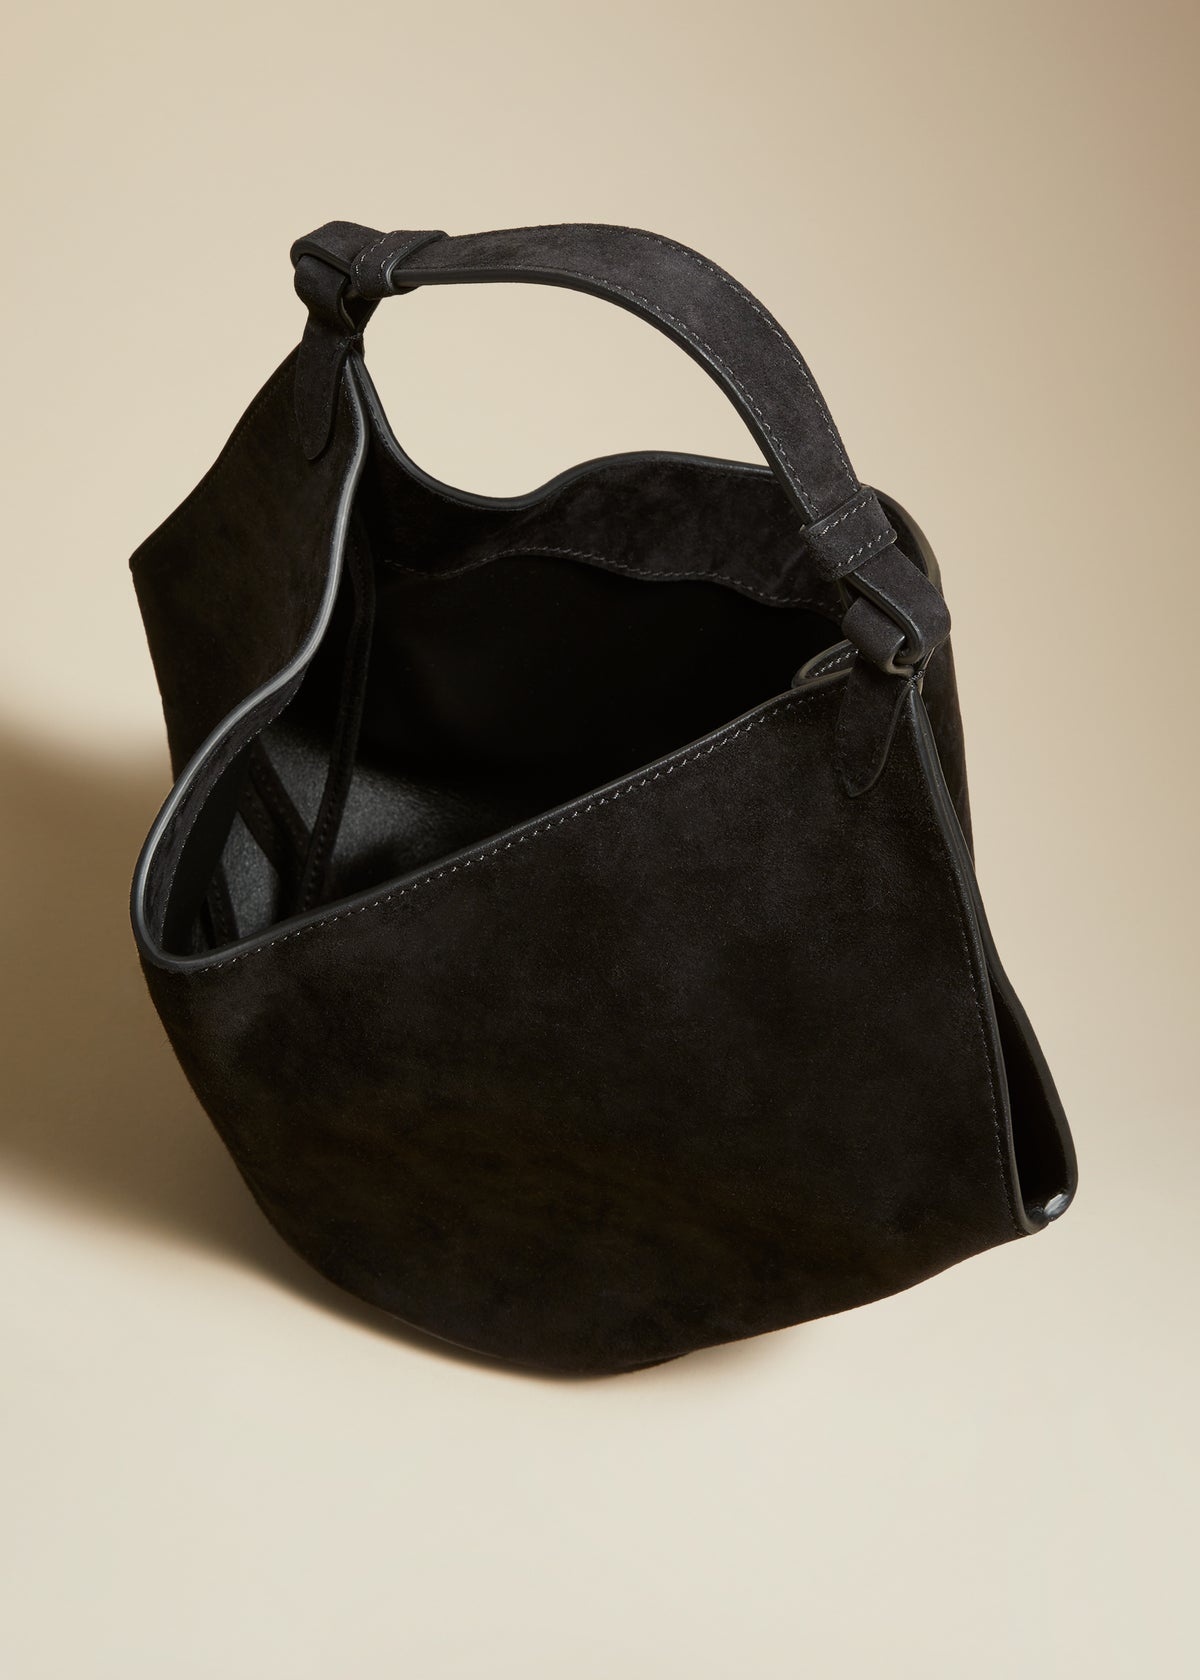 The Mini Lotus Bag in Black Suede - 3